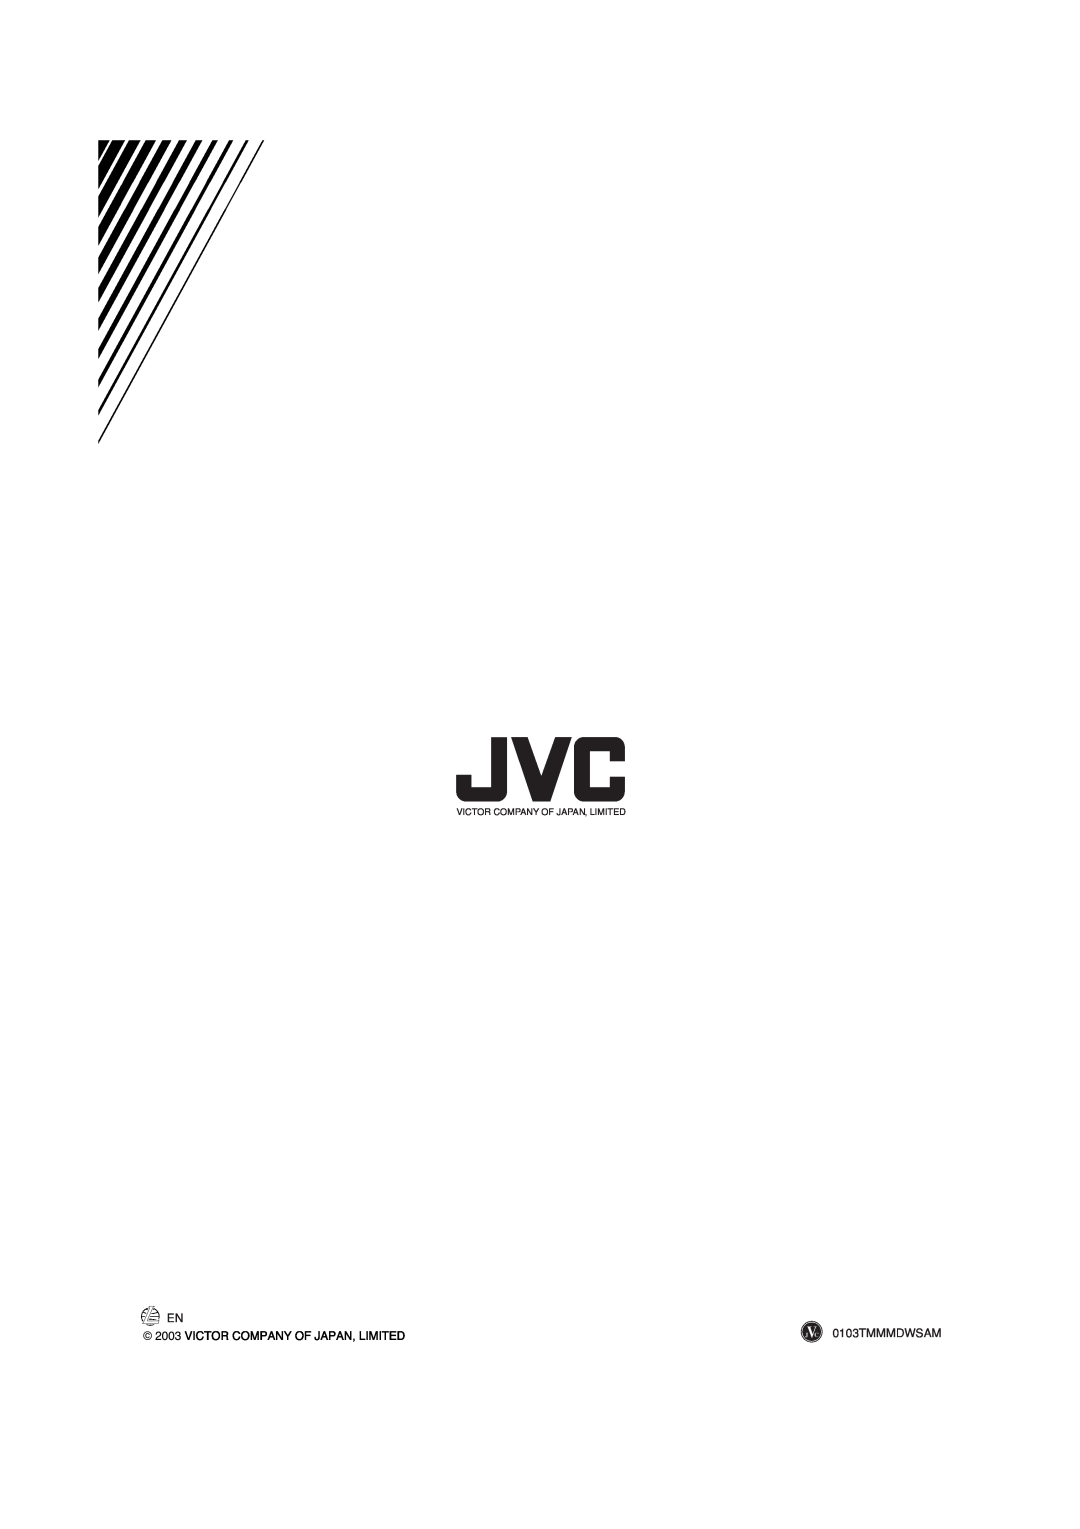 JVC MX-GA77, MX-GT88, SP-MXGT88, SP-MXGA77 manual EN JVC 0103TMMMDWSAM, Victor Company Of Japan, Limited 